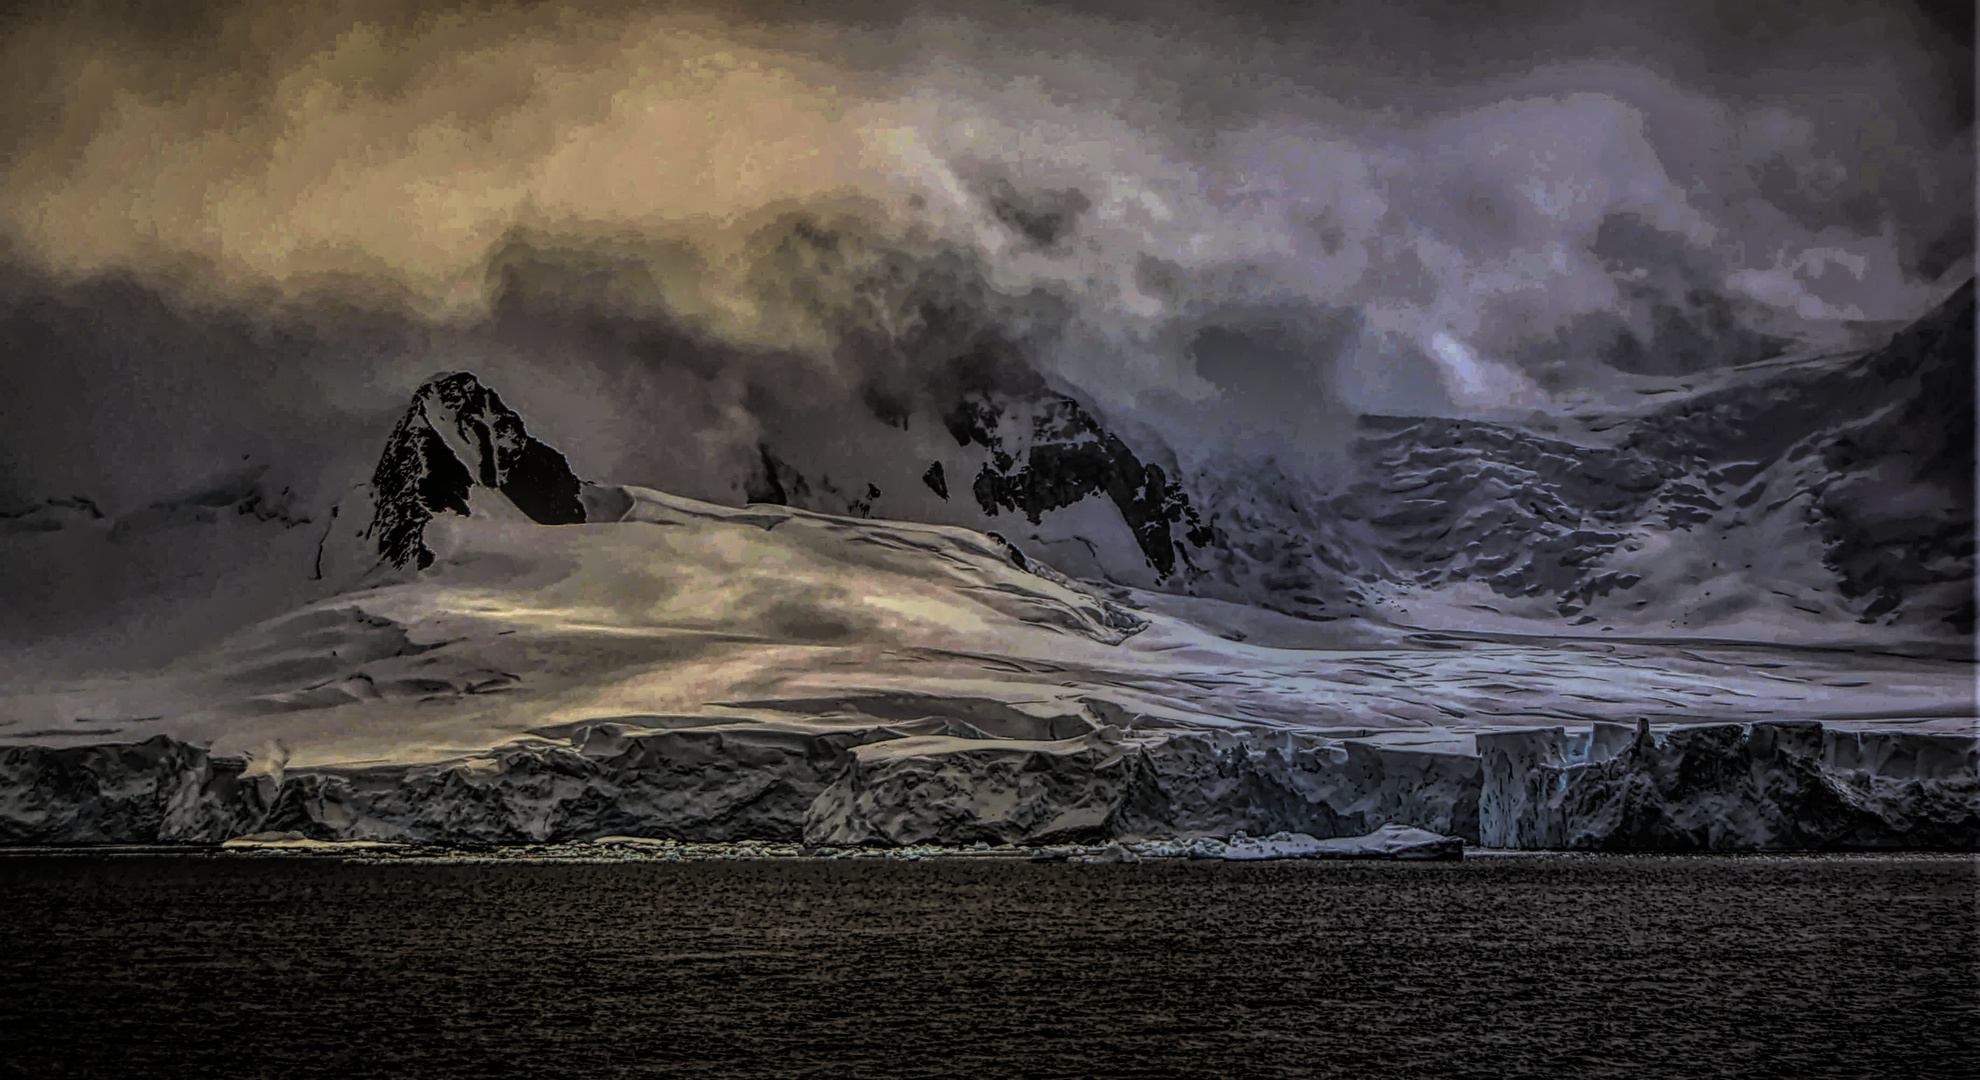 Impressions of Antarktica - Motiv vom weltenbummler